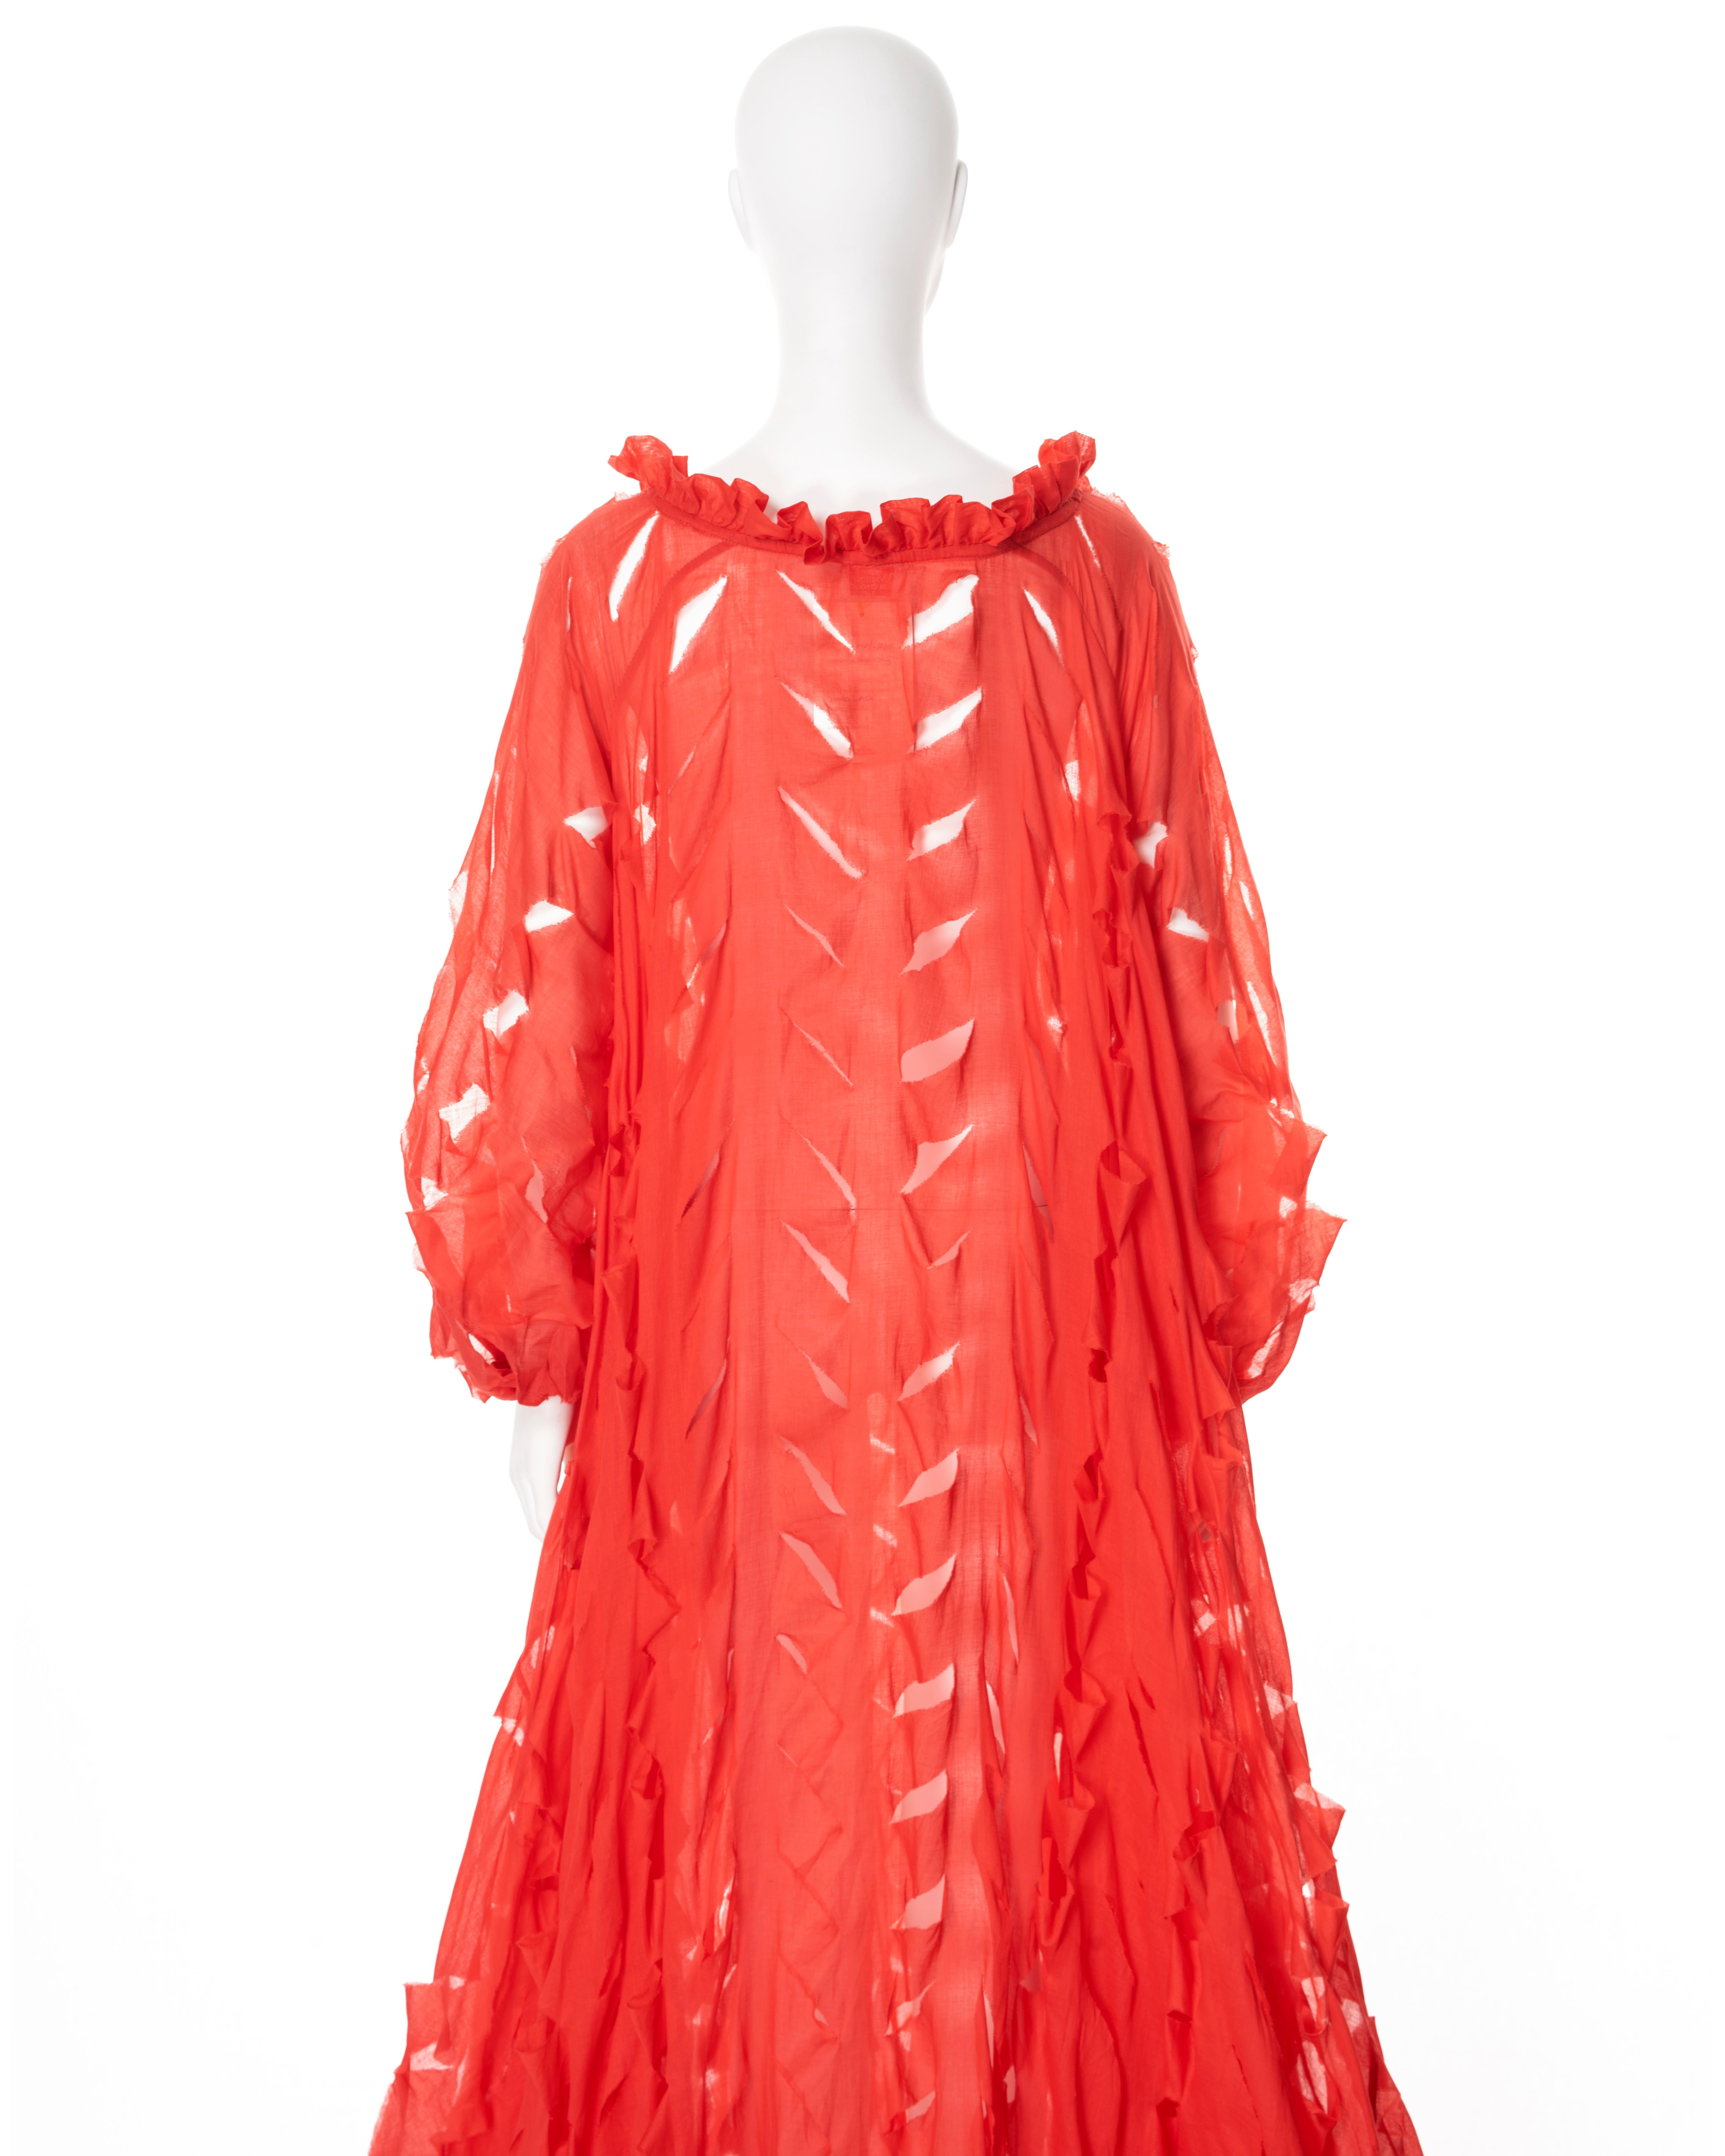 Vivienne Westwood hand-cut red cotton circle-cut dress, ss 1991 For Sale 8